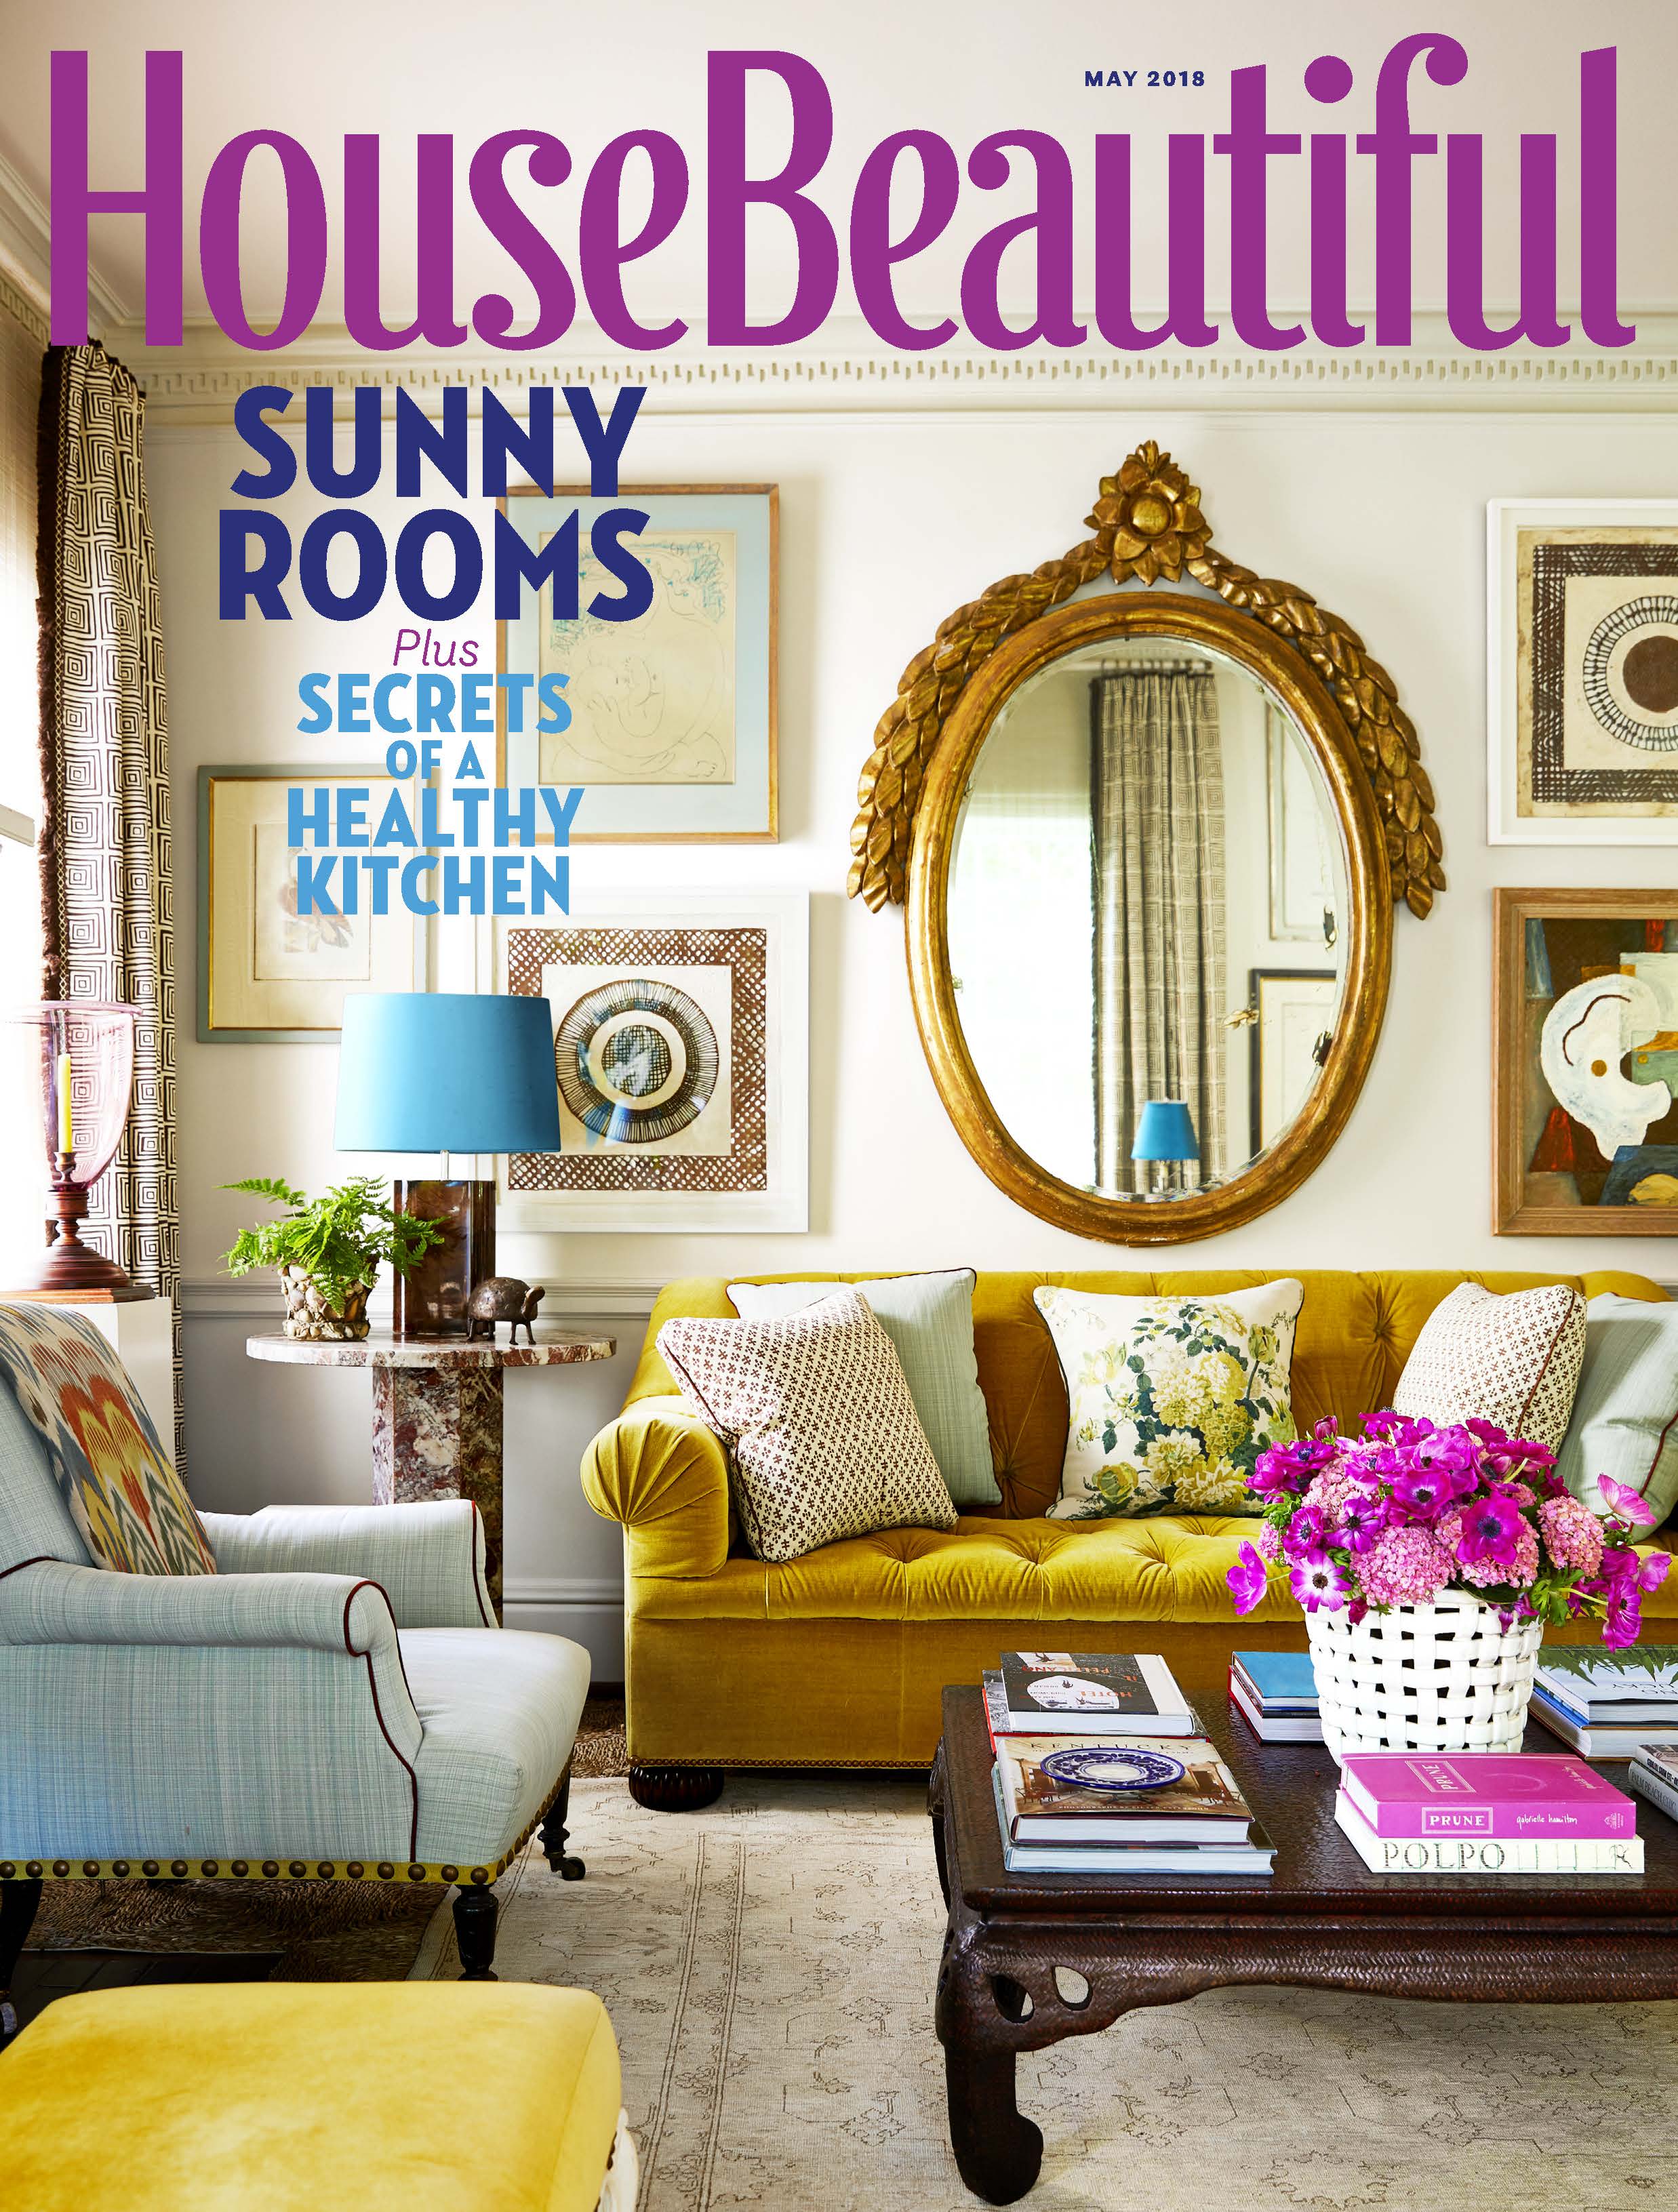 5 Best Interior Design Magazines To Inspire You